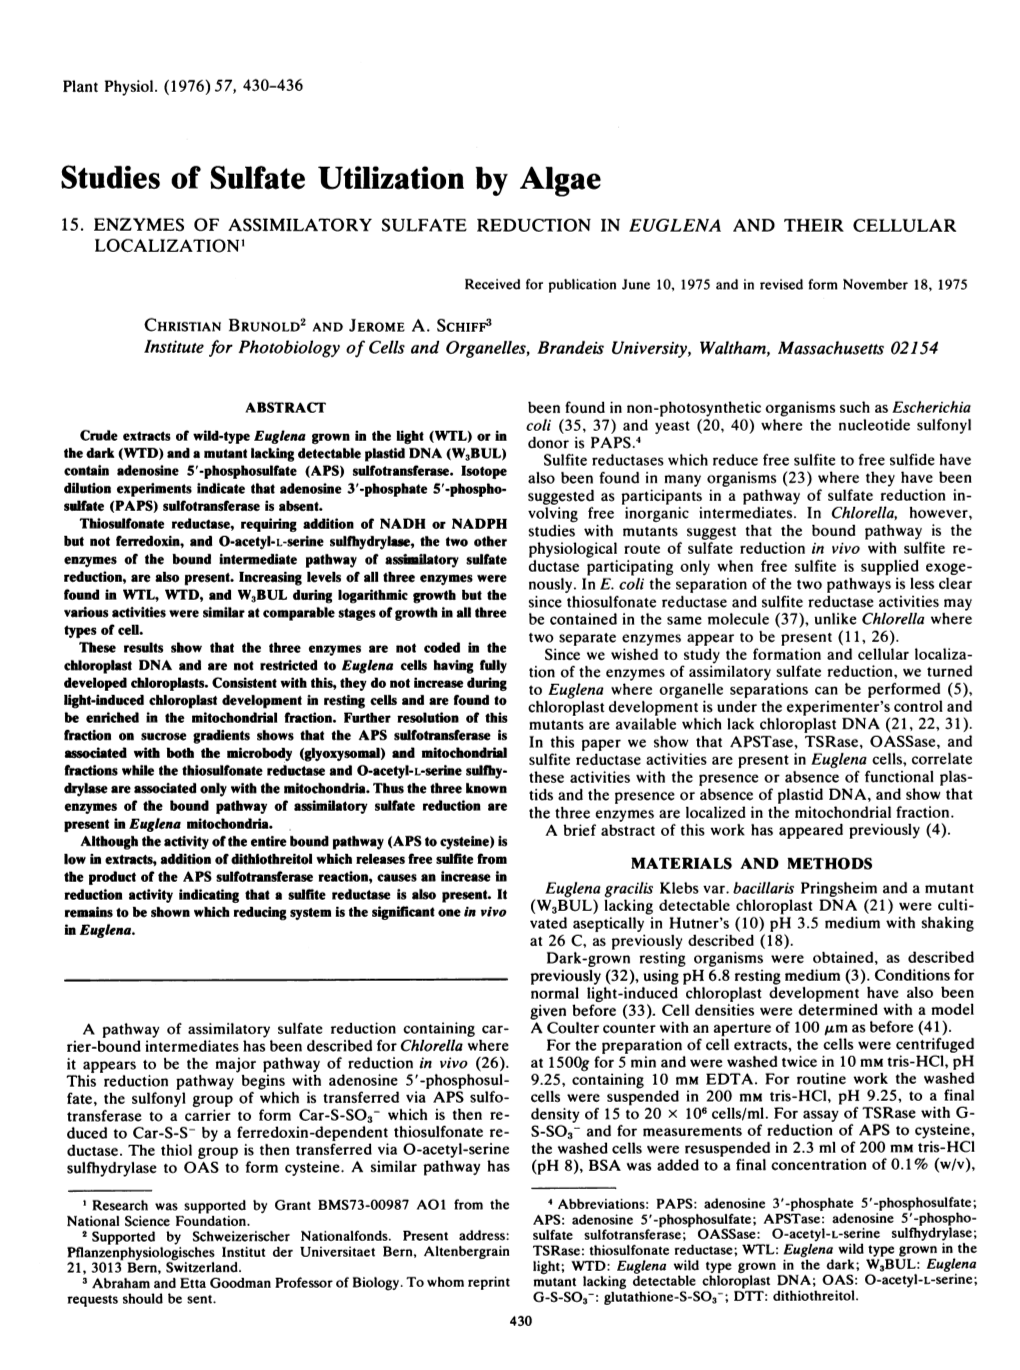 Studies of Sulfate Utilization by Algae